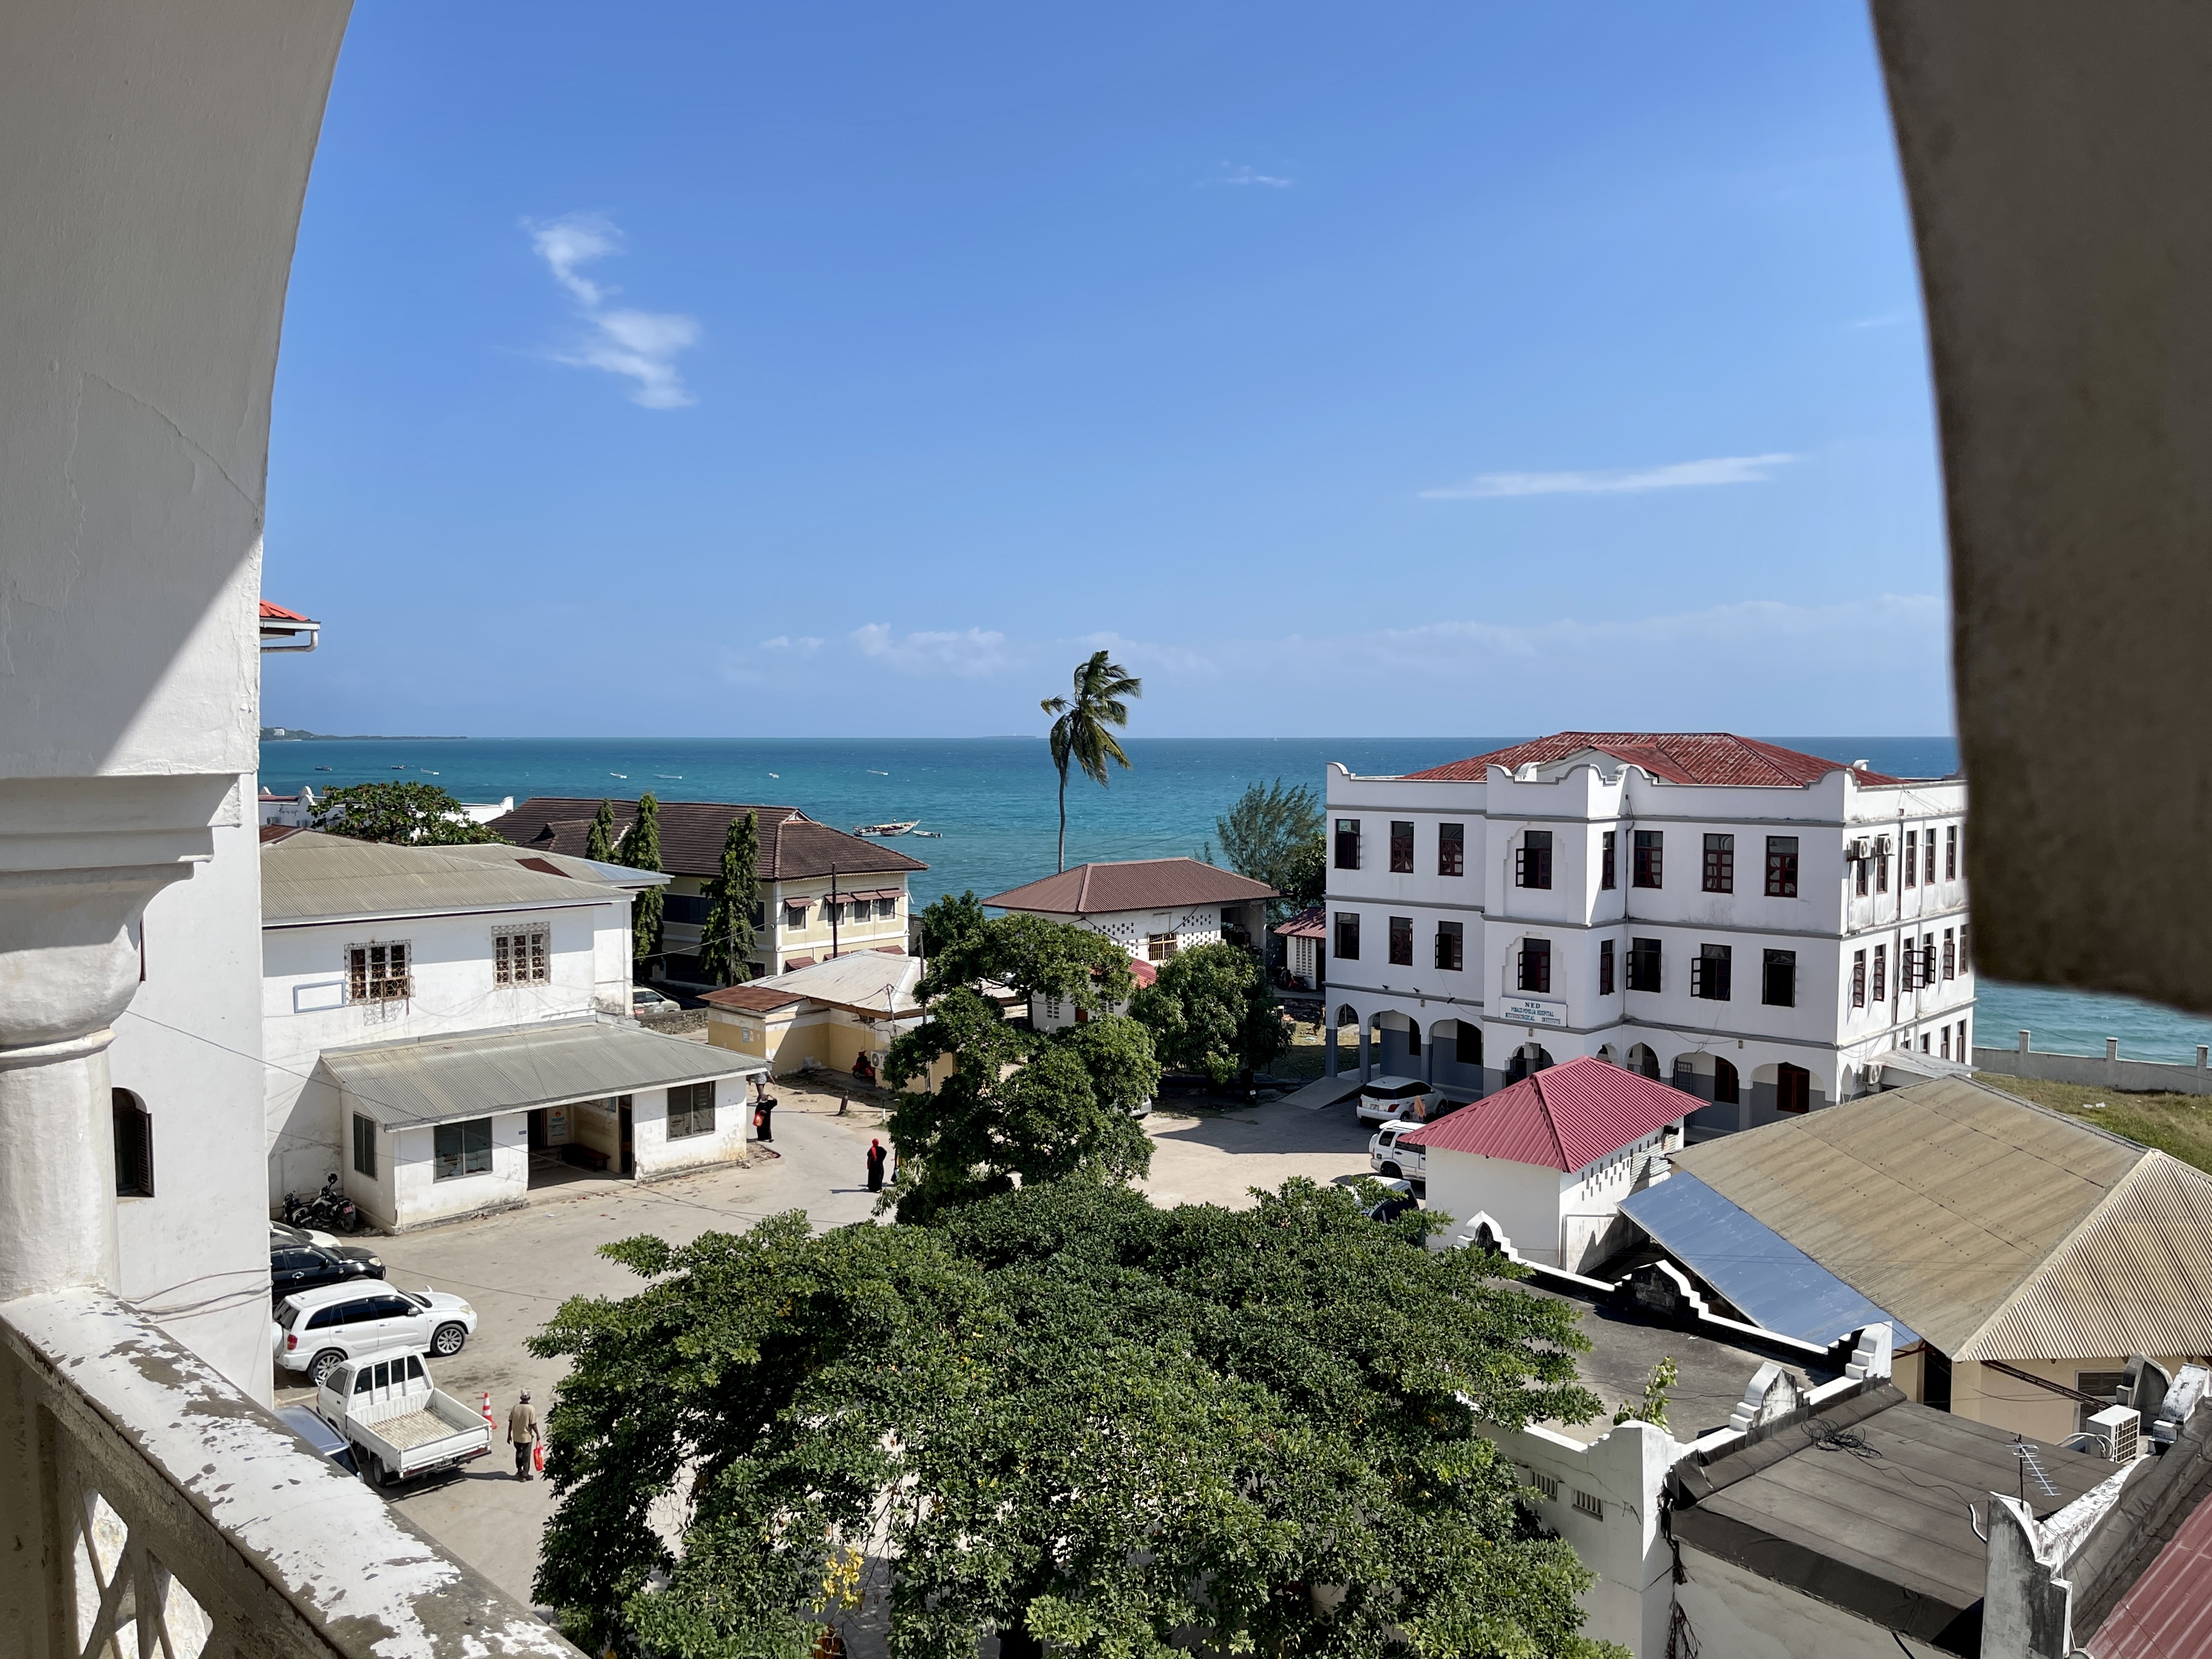 A glimpse of Zanzibar Island in Tanzania. /CGTN